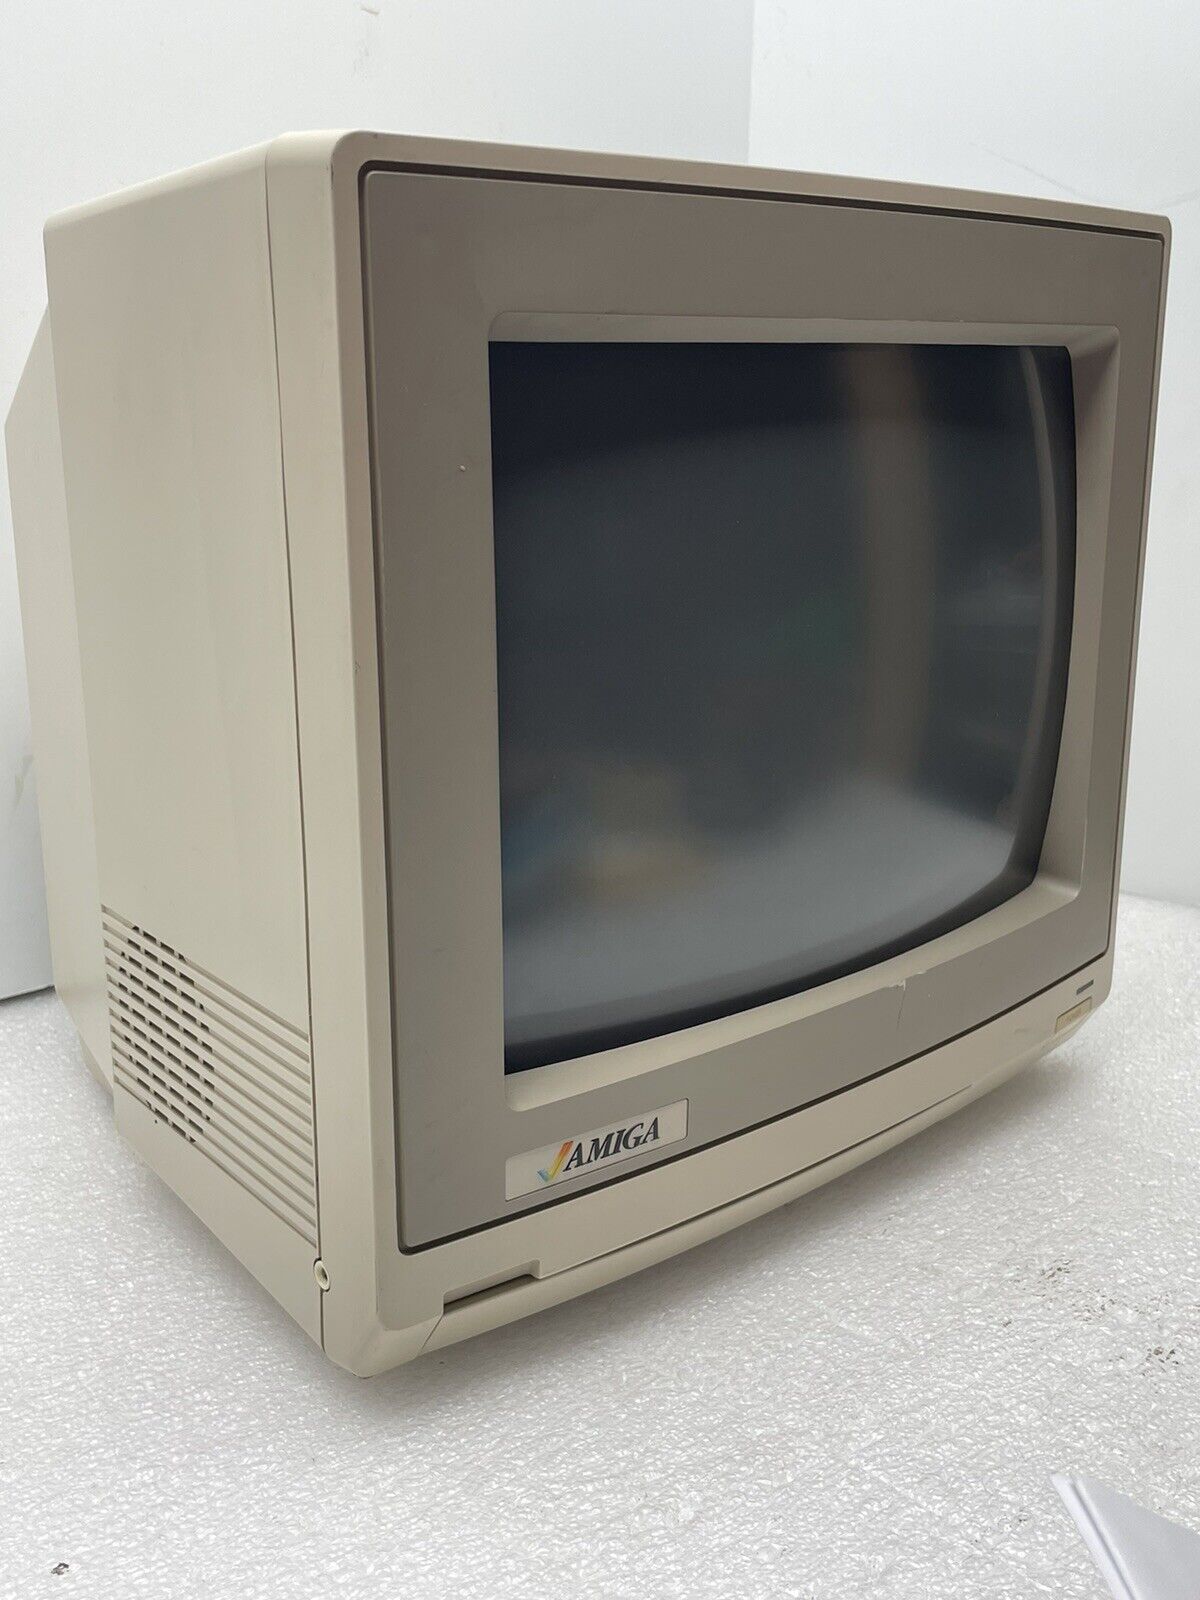 TESTED WORKING - 1986 COMMODORE AMIGA 1080 RGB A/V COMPUTER MONITOR / VTG GAMING